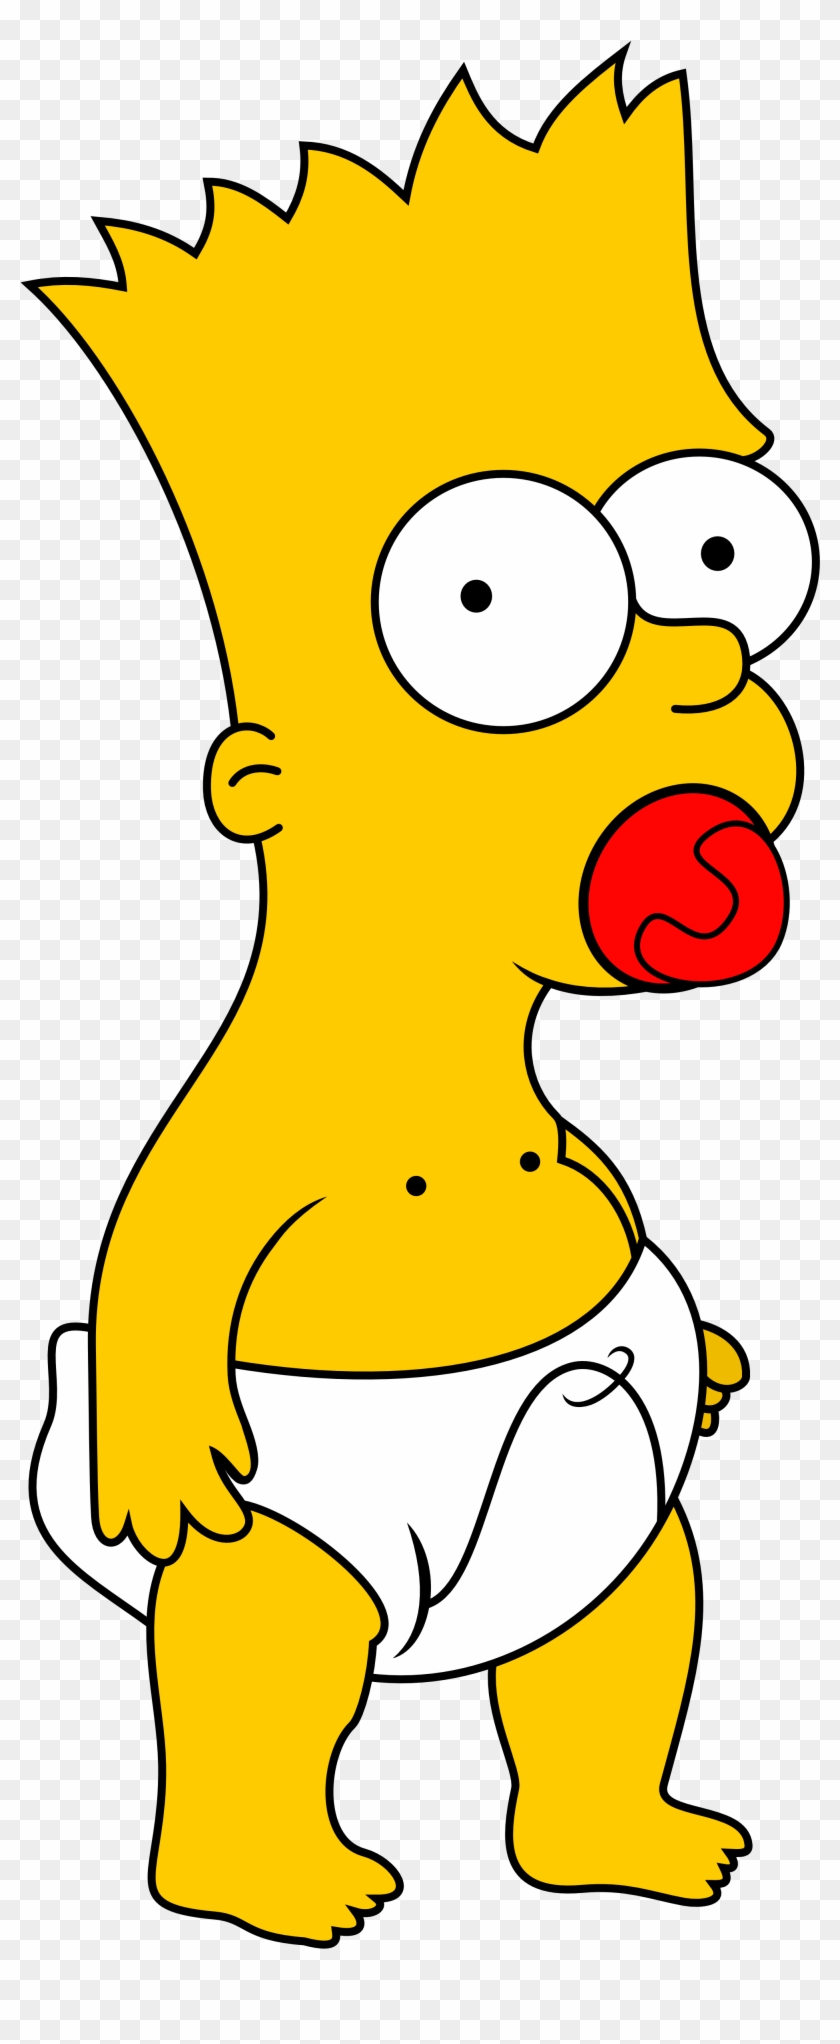 Bart Simpson Lisa Simpson Homer Simpson Maggie Simpson - Bart As A Baby Clipart #831514